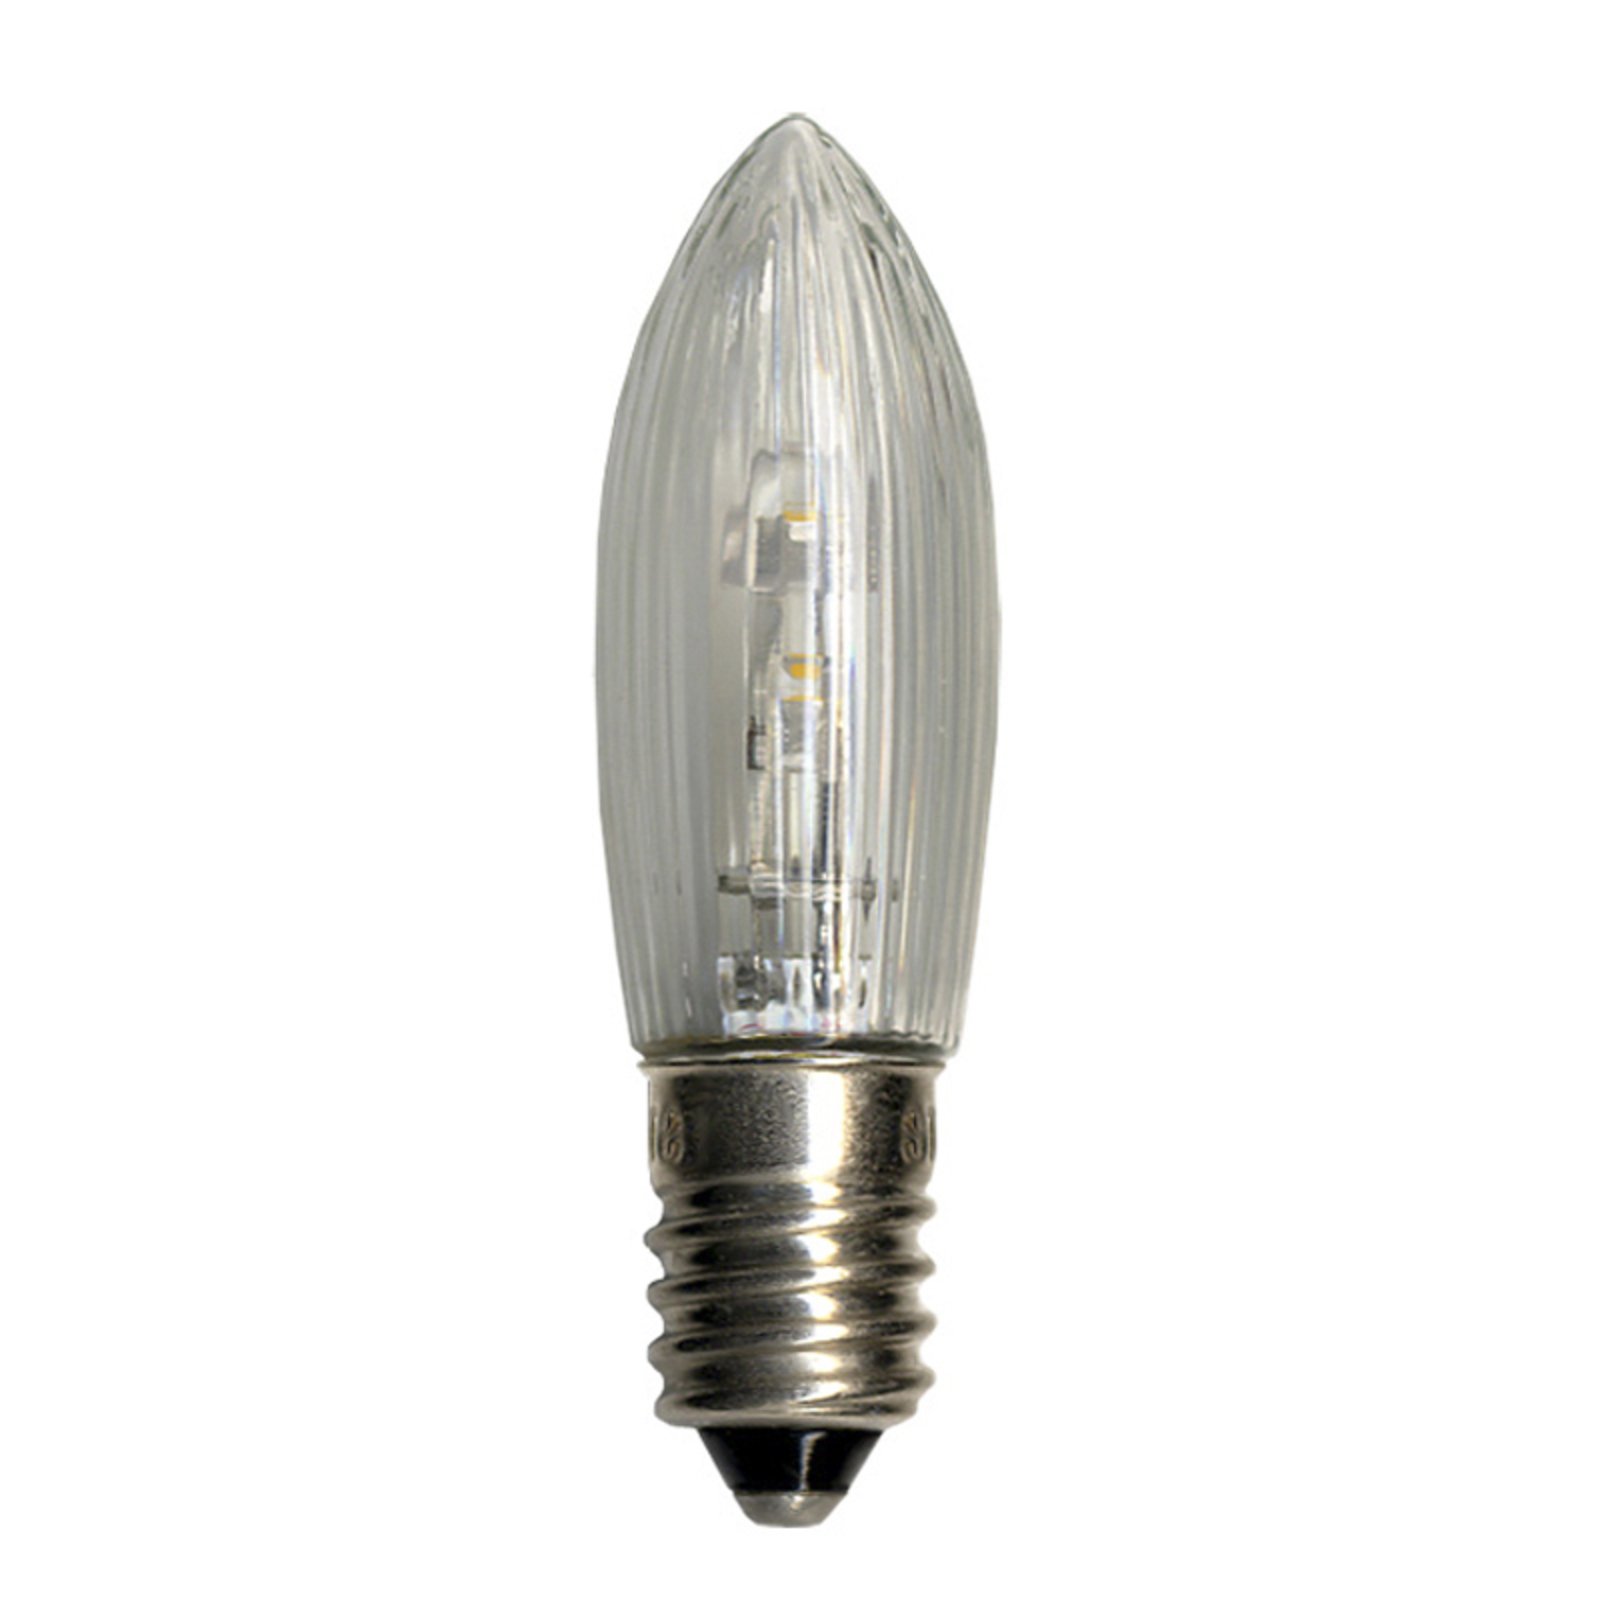 E10 0.1 W 10-55 V LED bulb pack of 3, candle shape